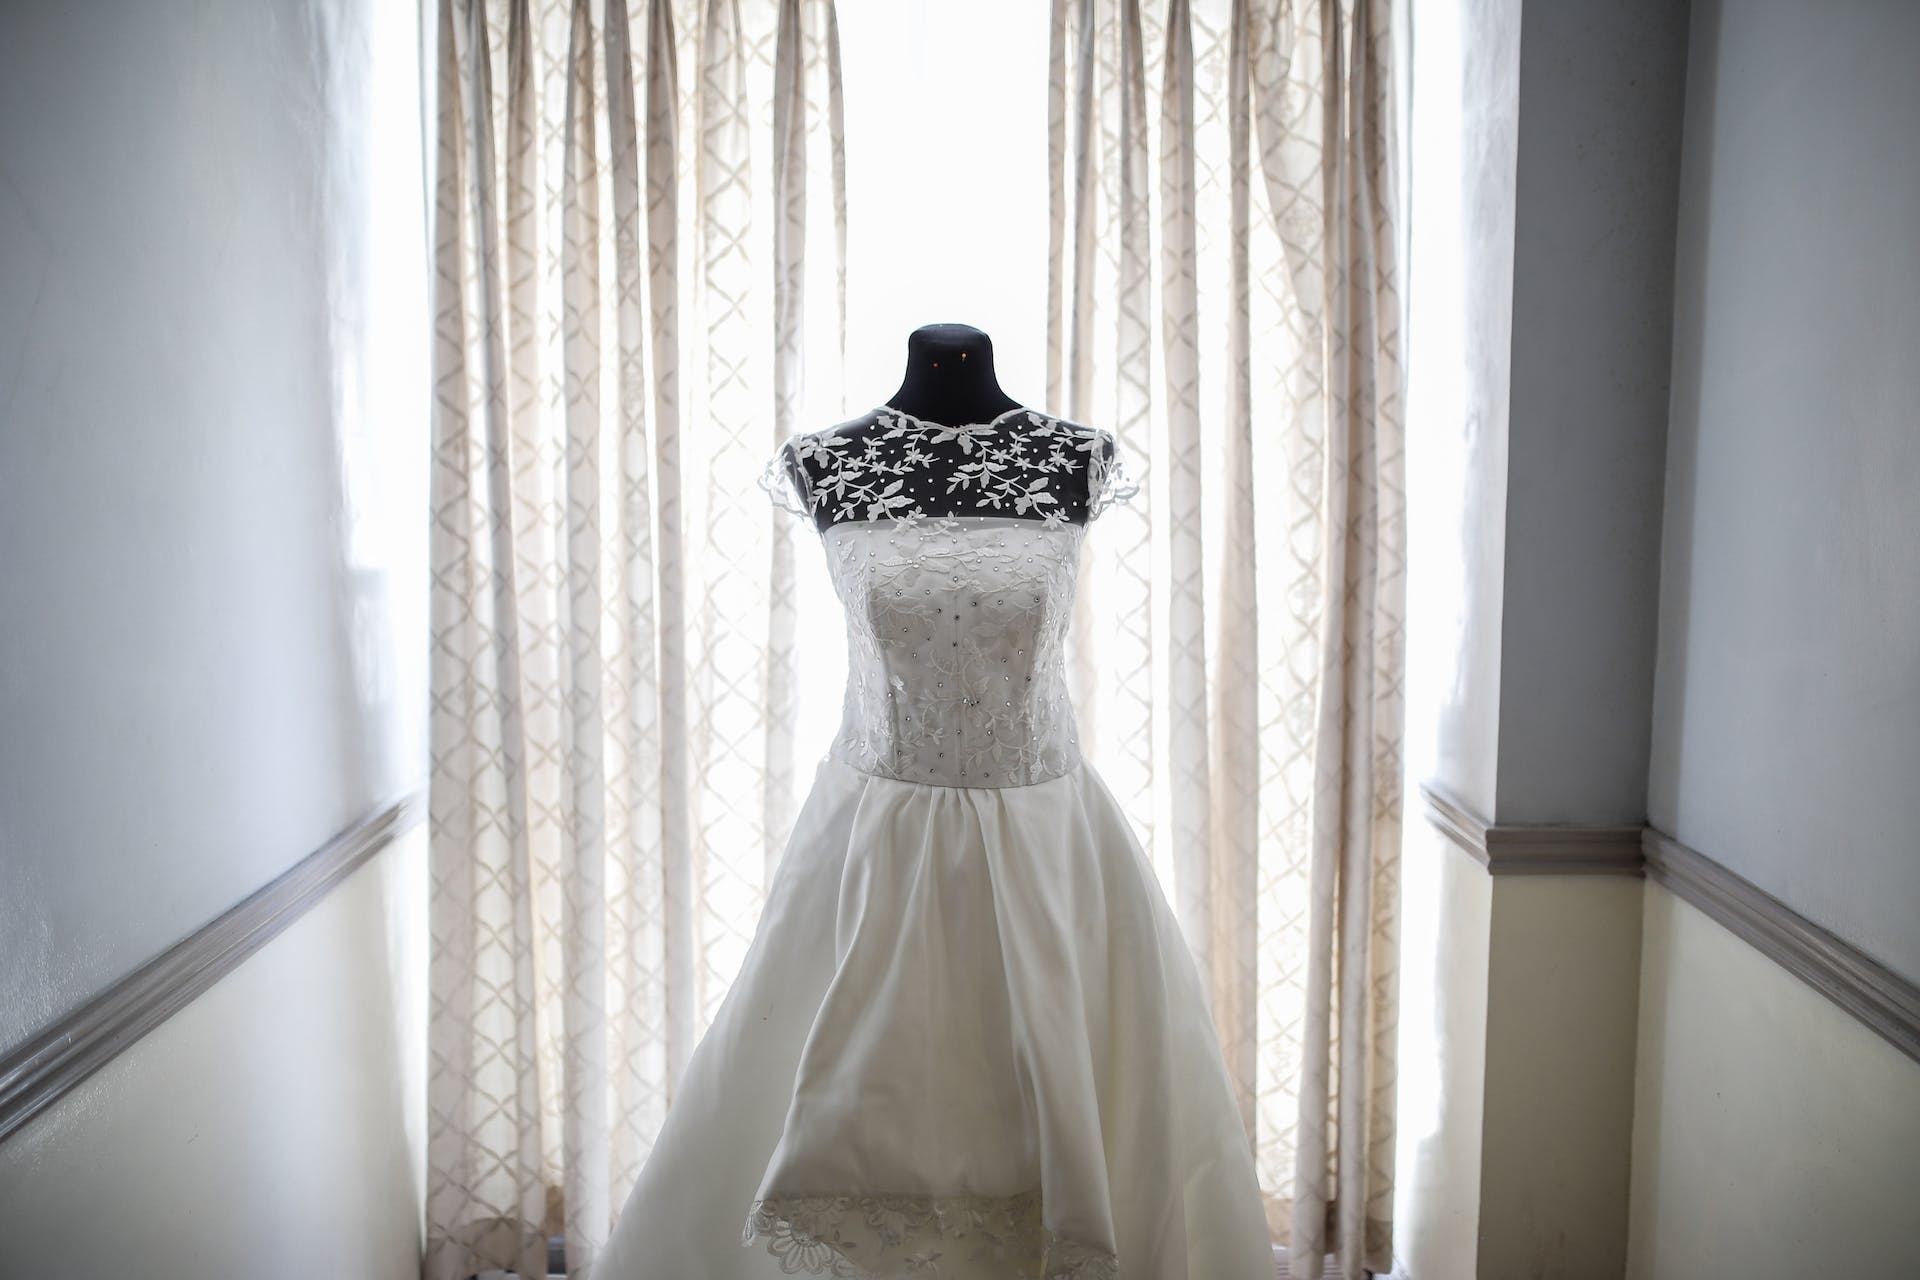 A bridal gown | Source: Pexels